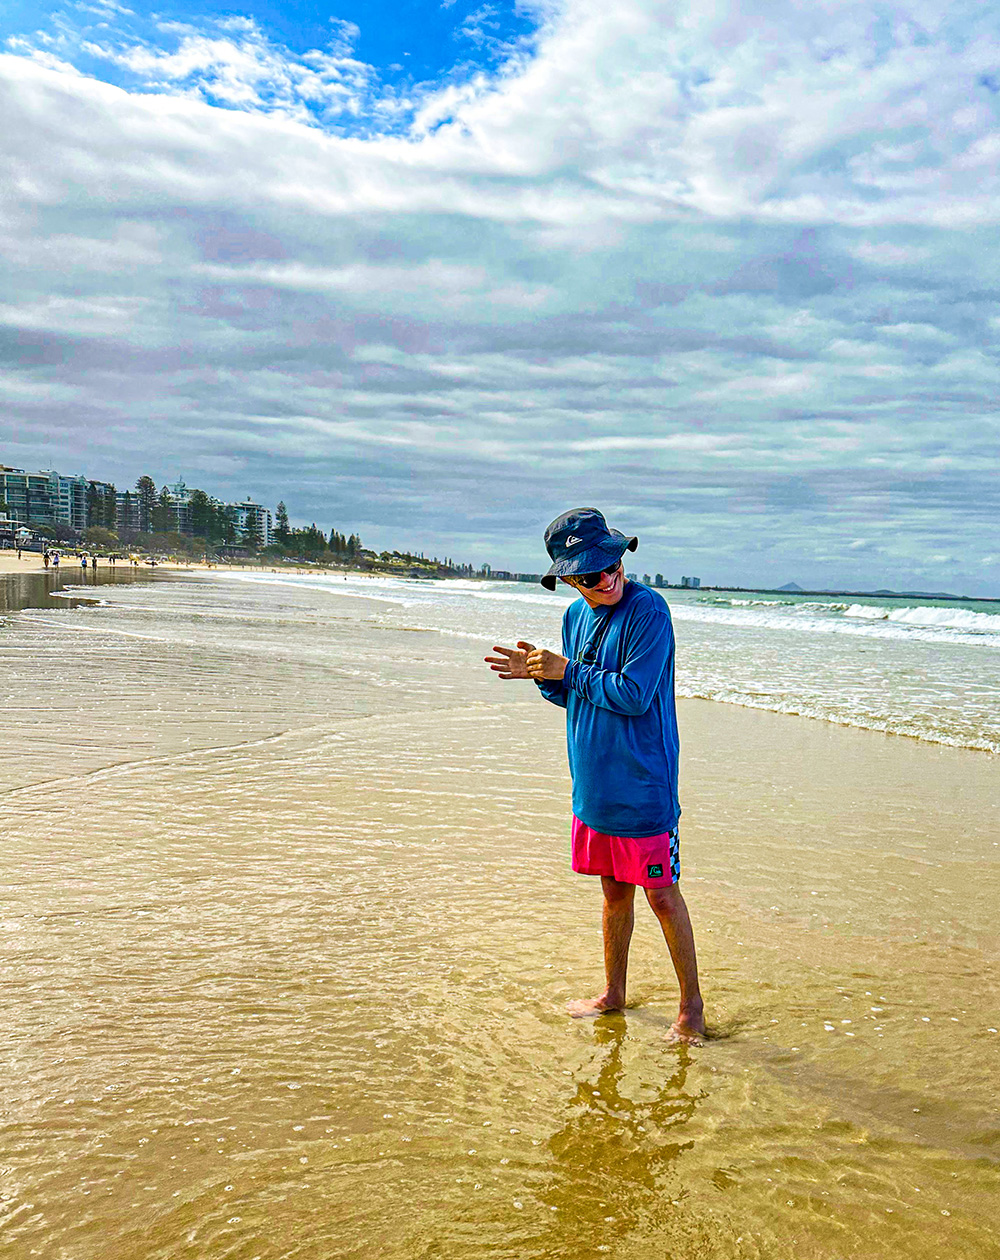 Scott on a beach in Australia.